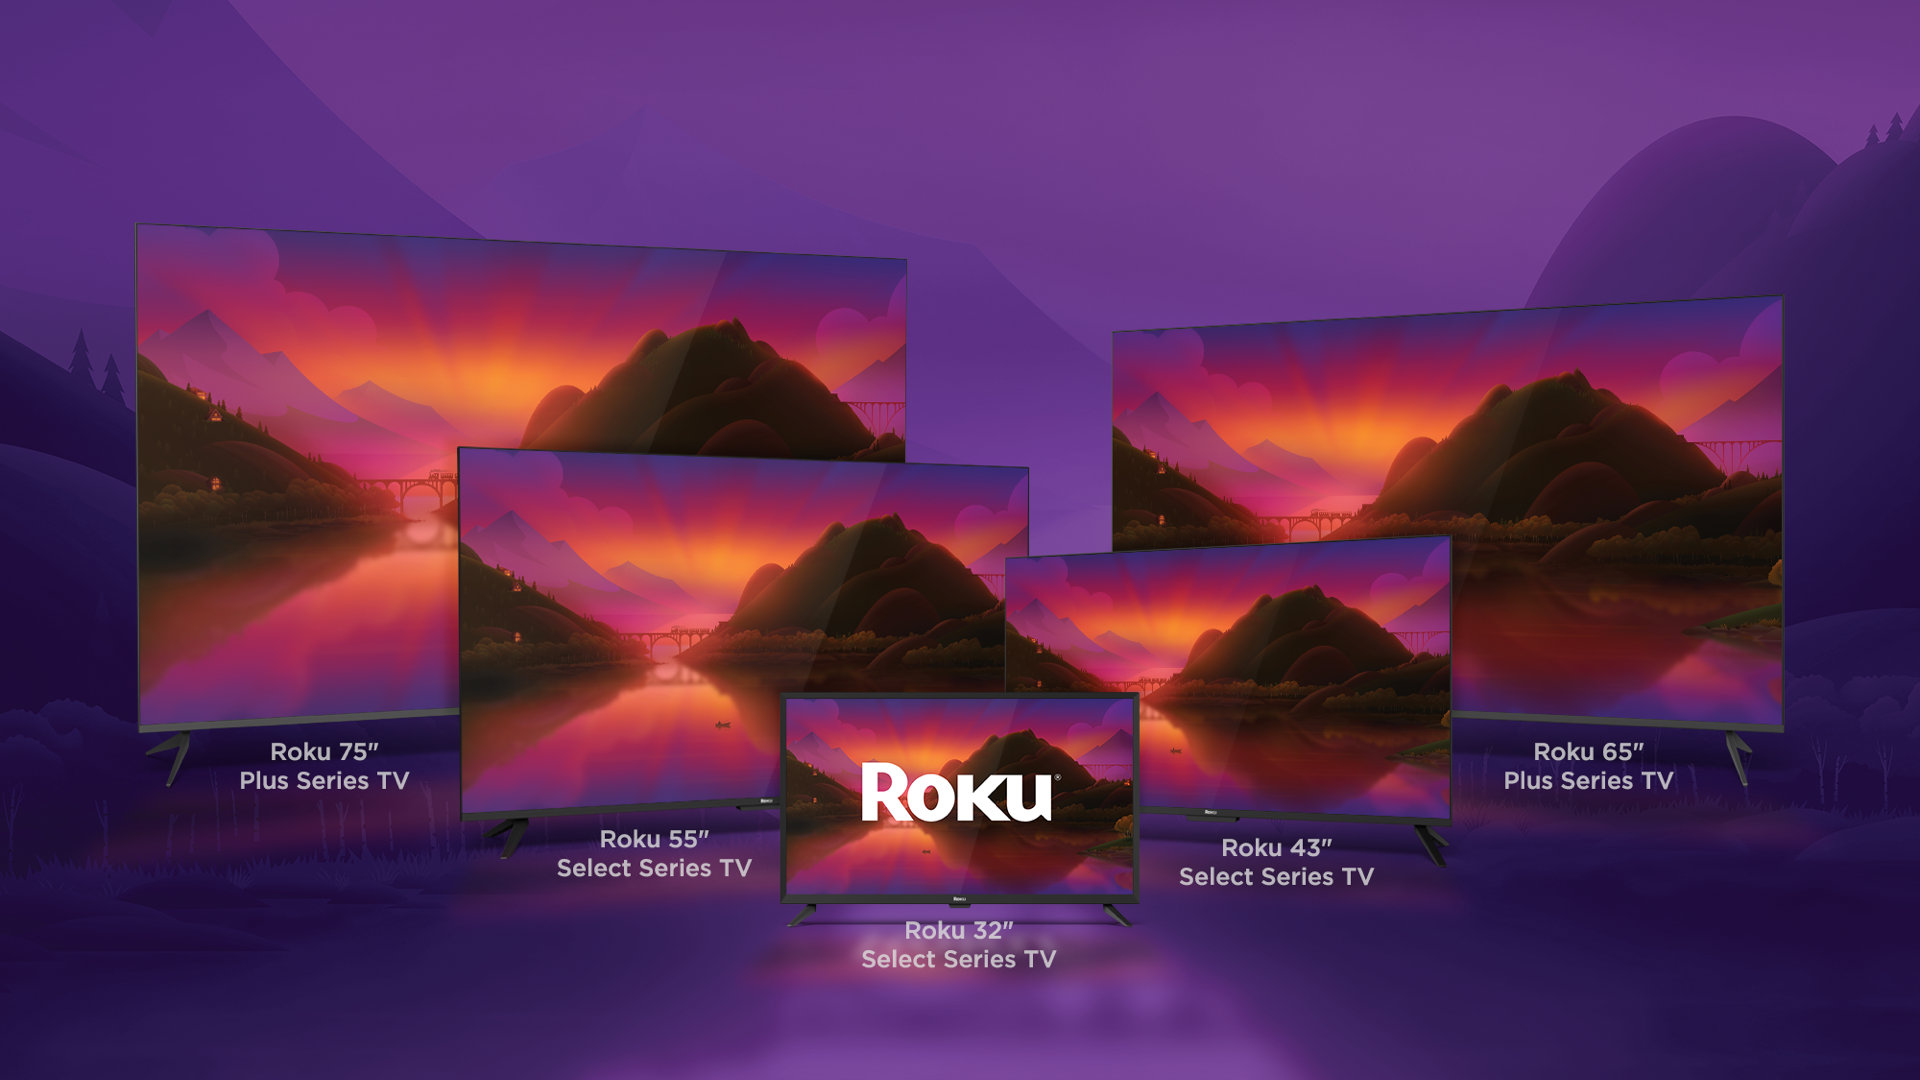 New Roku-branded TV lineup.